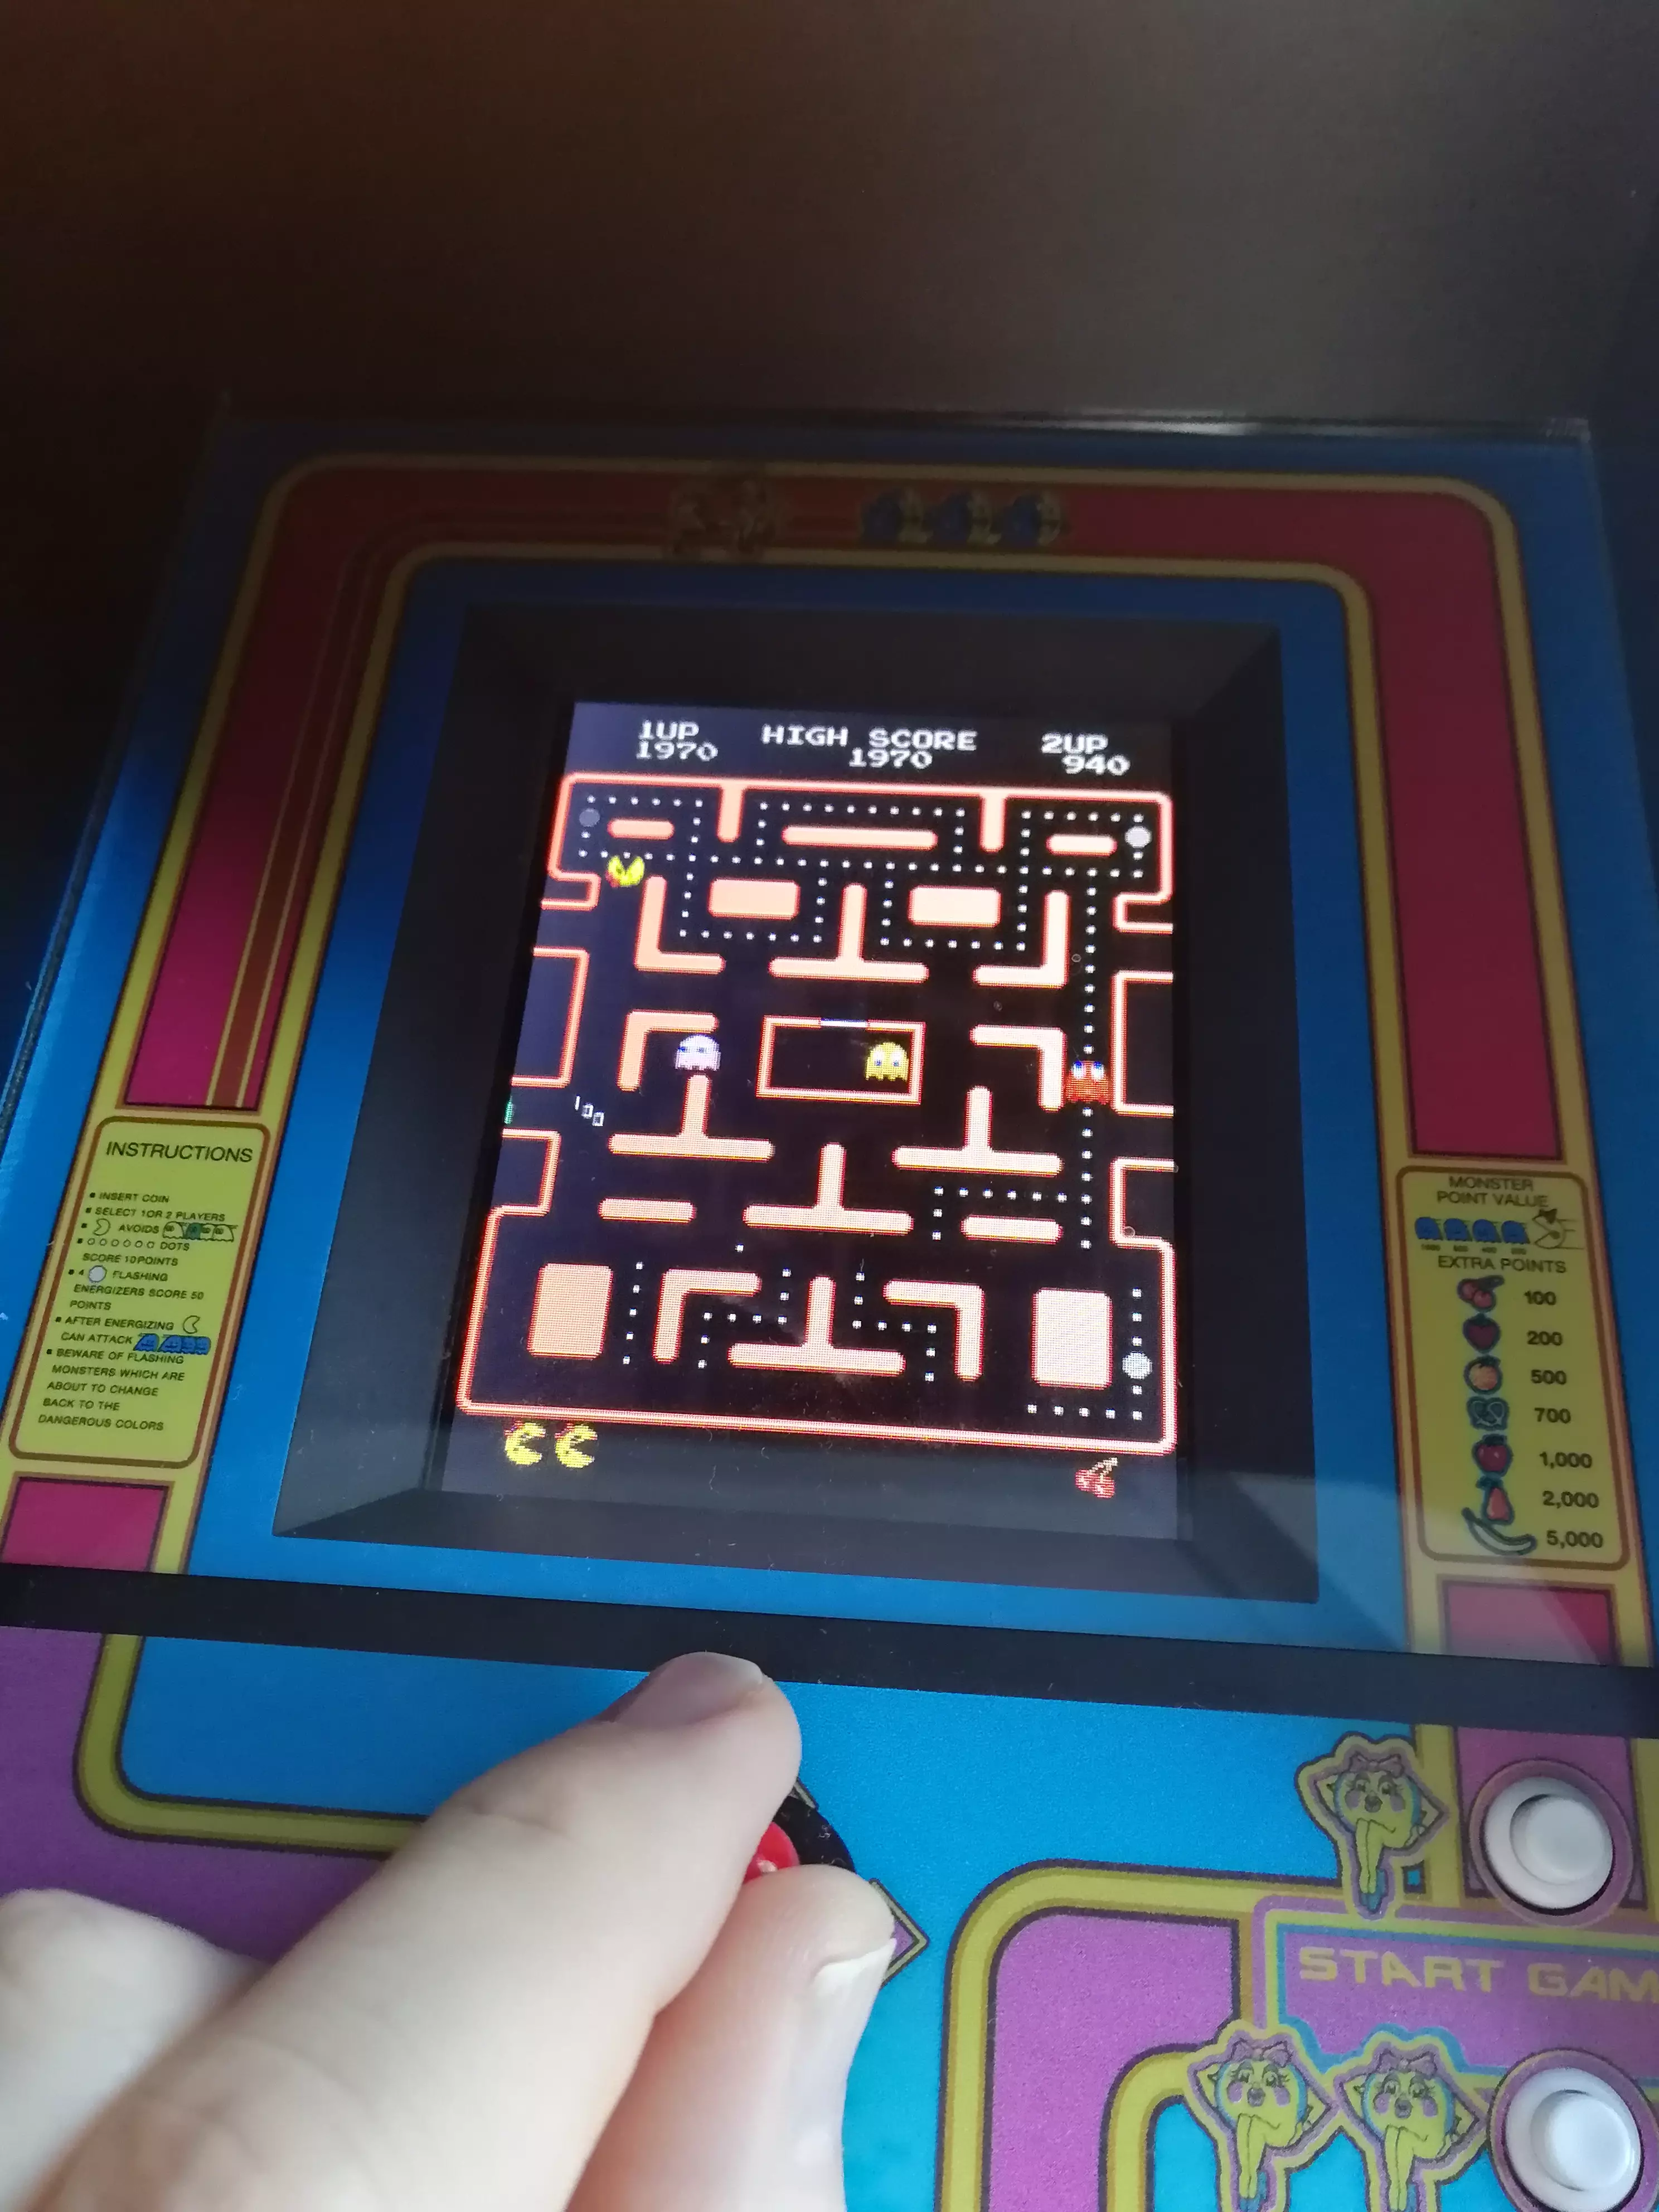 Quarter Arcades' Ms Pac-Man /